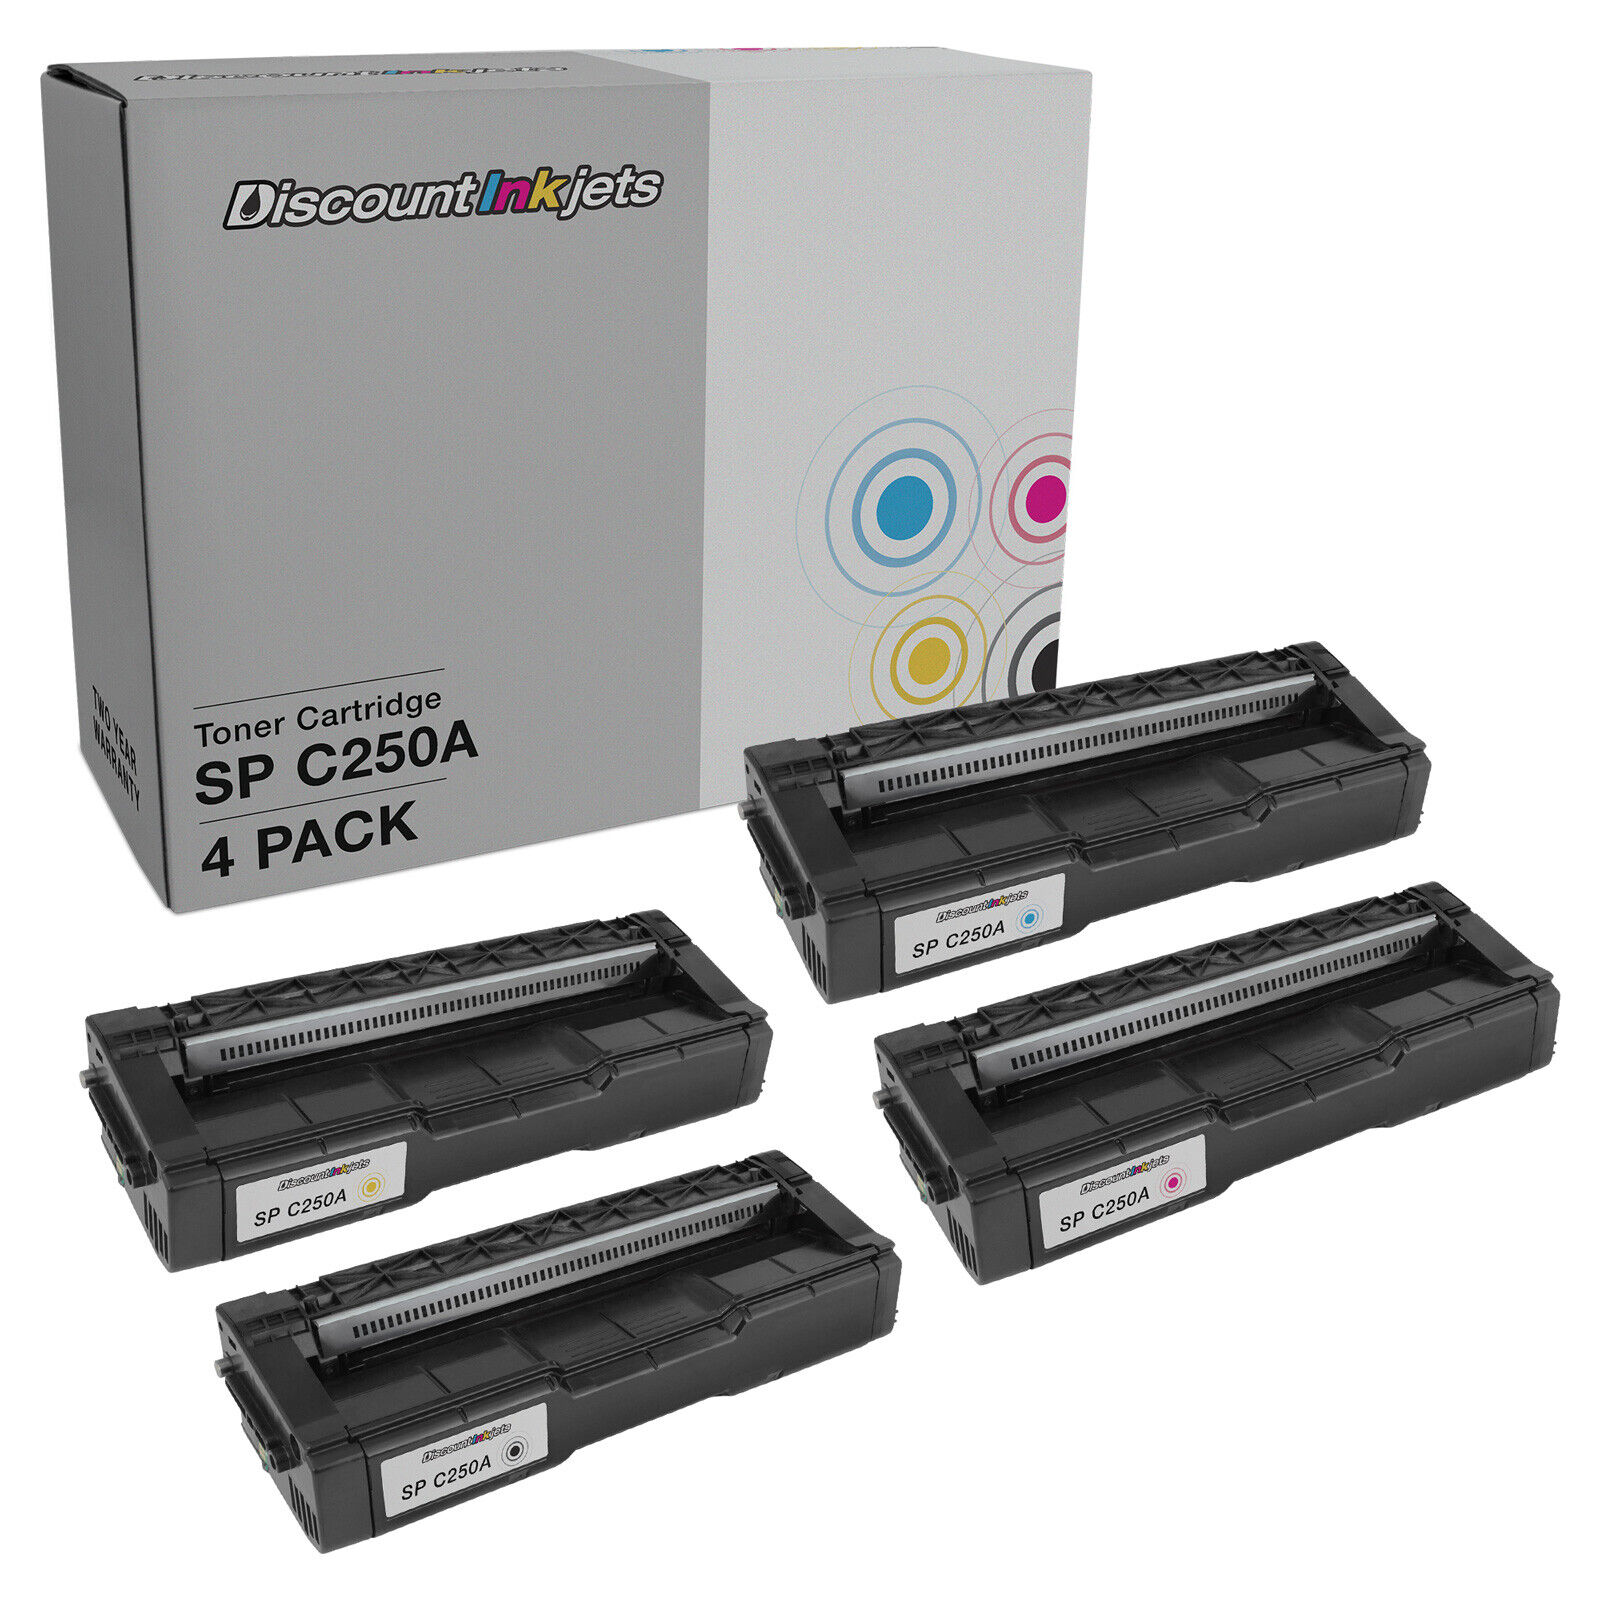 Toner Cartridges for Ricoh SP C250 (Black, Cyan, Magenta, Yellow 4-Pack)